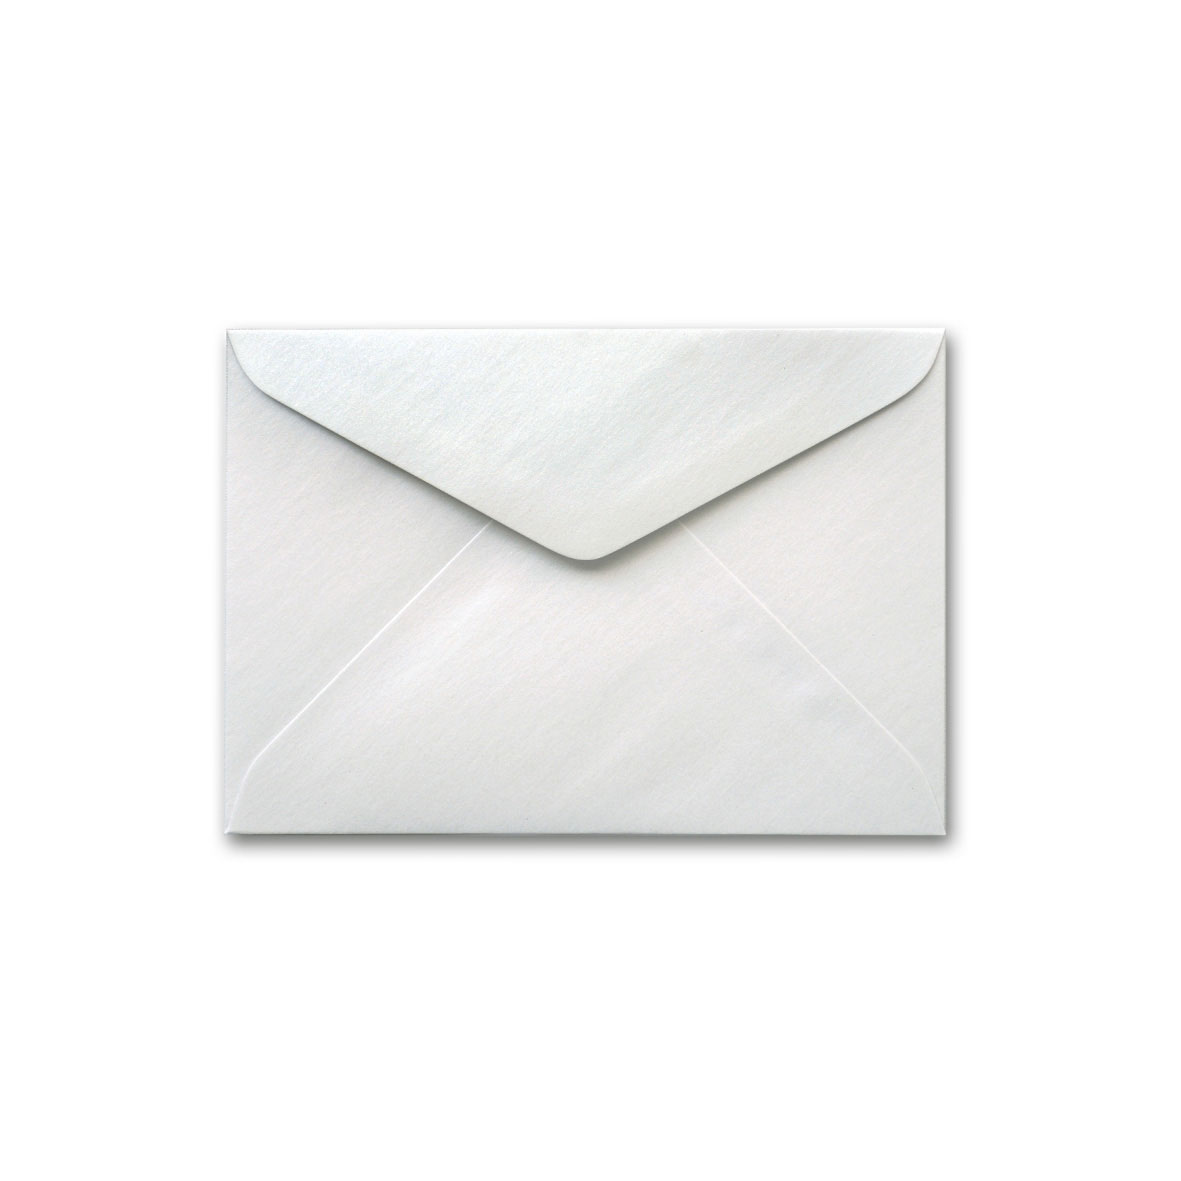 C6 StarDream Silver Envelope (114x162mm)